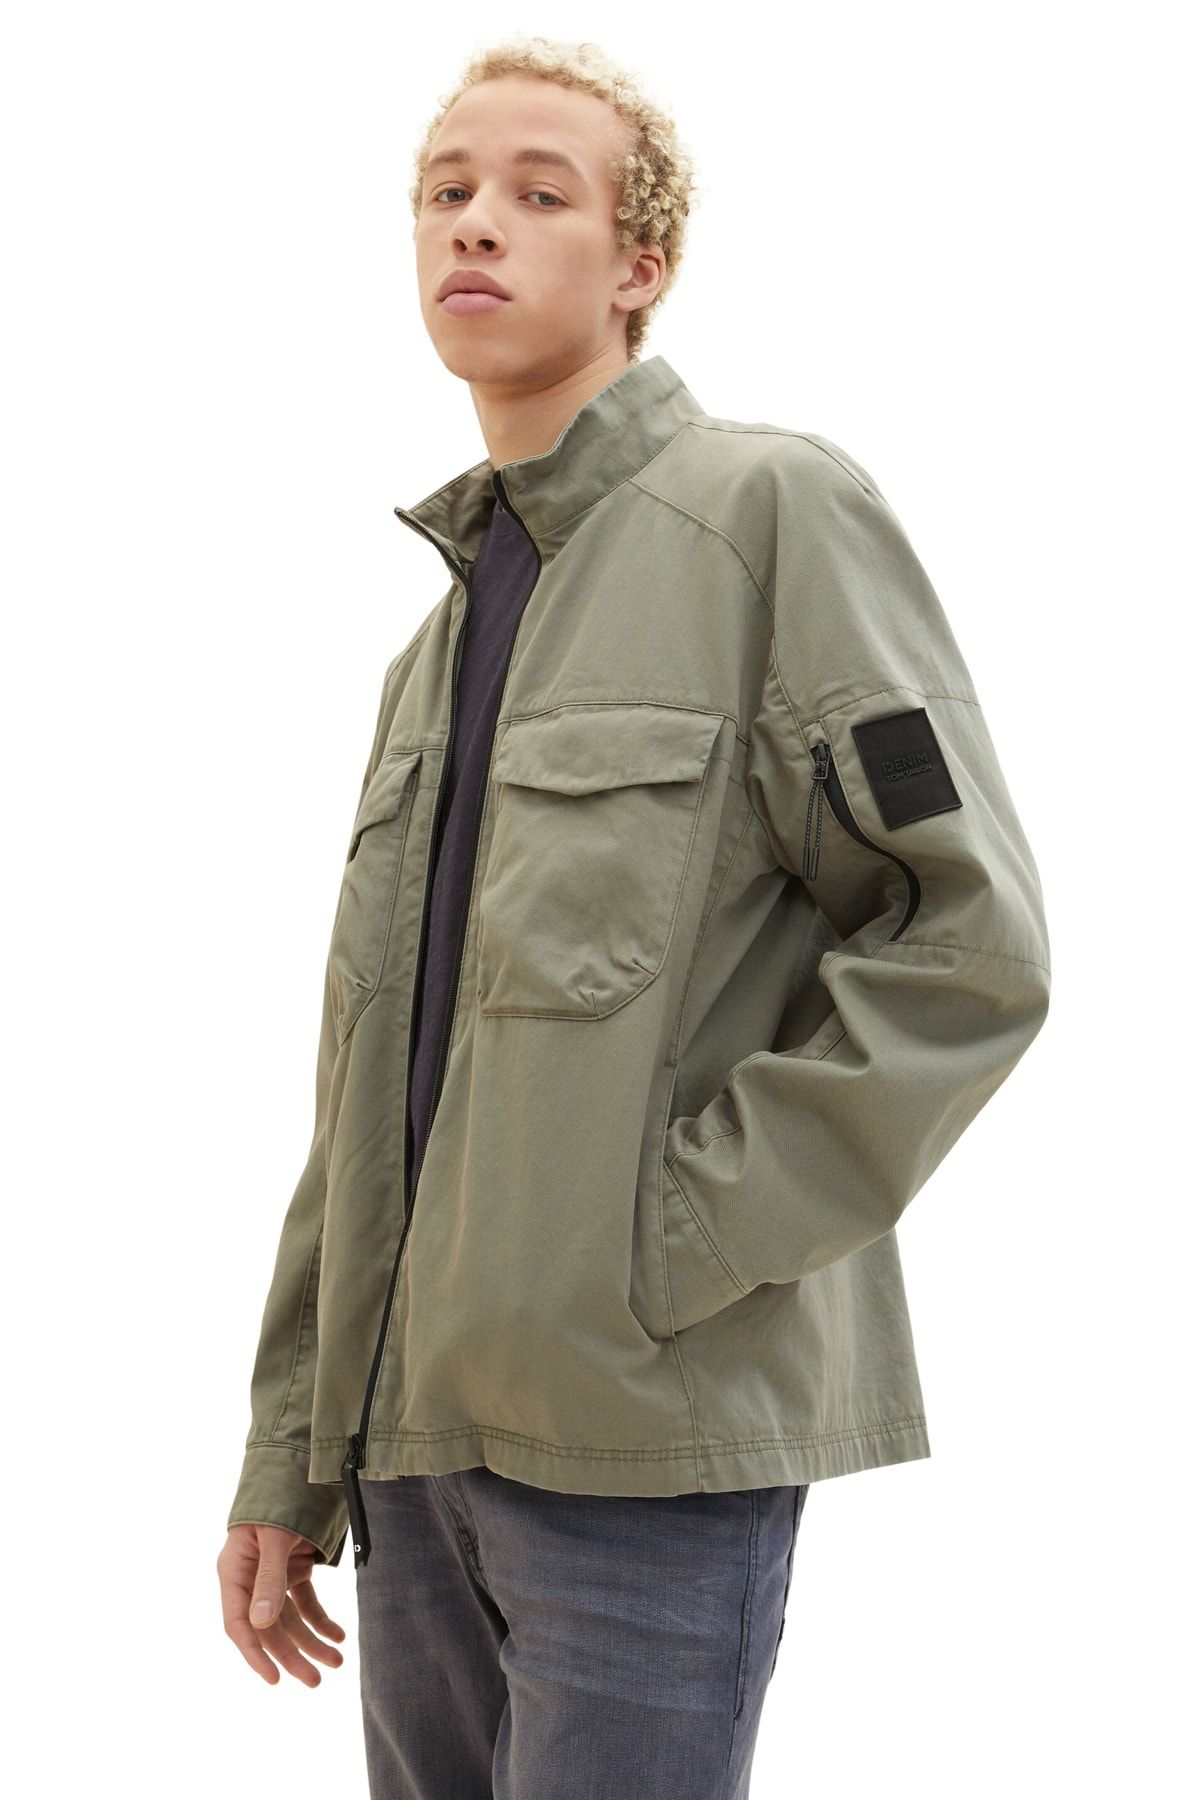 Tom Tailor Leather Jacket male S | eBay